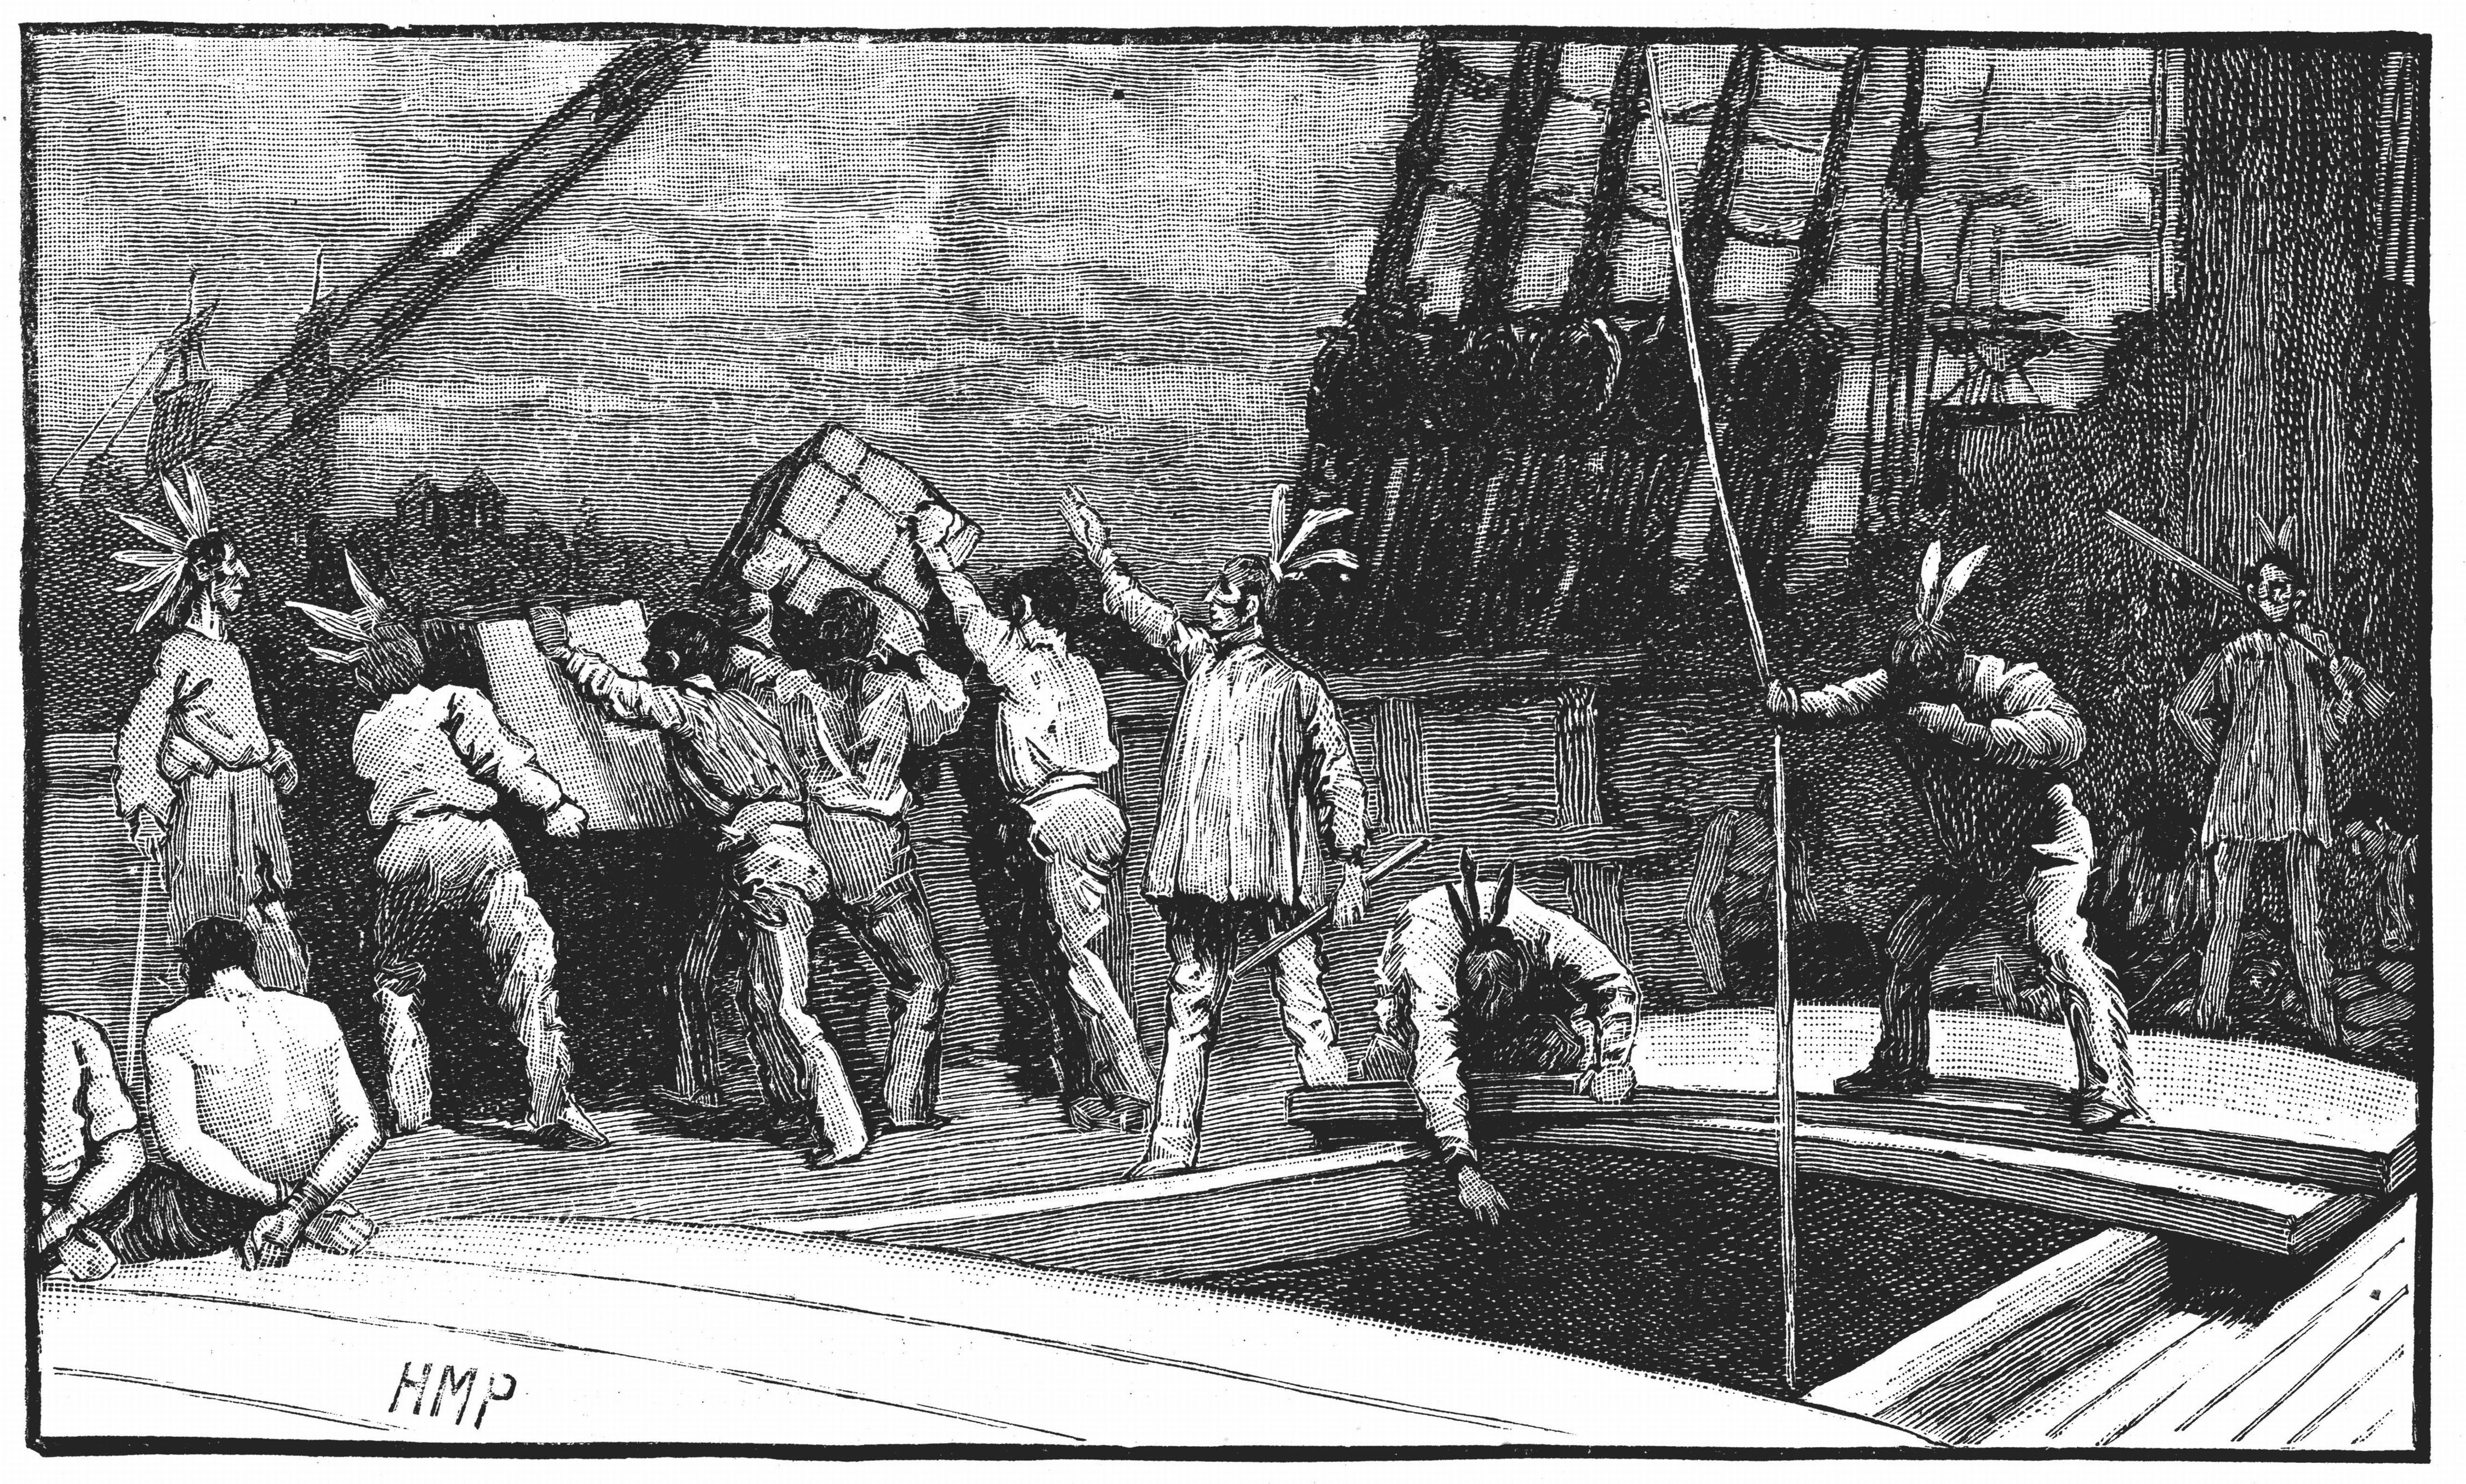 On this day in history, Dec. 16, 1773, brazen Boston Tea Party protest escalates American rebellion